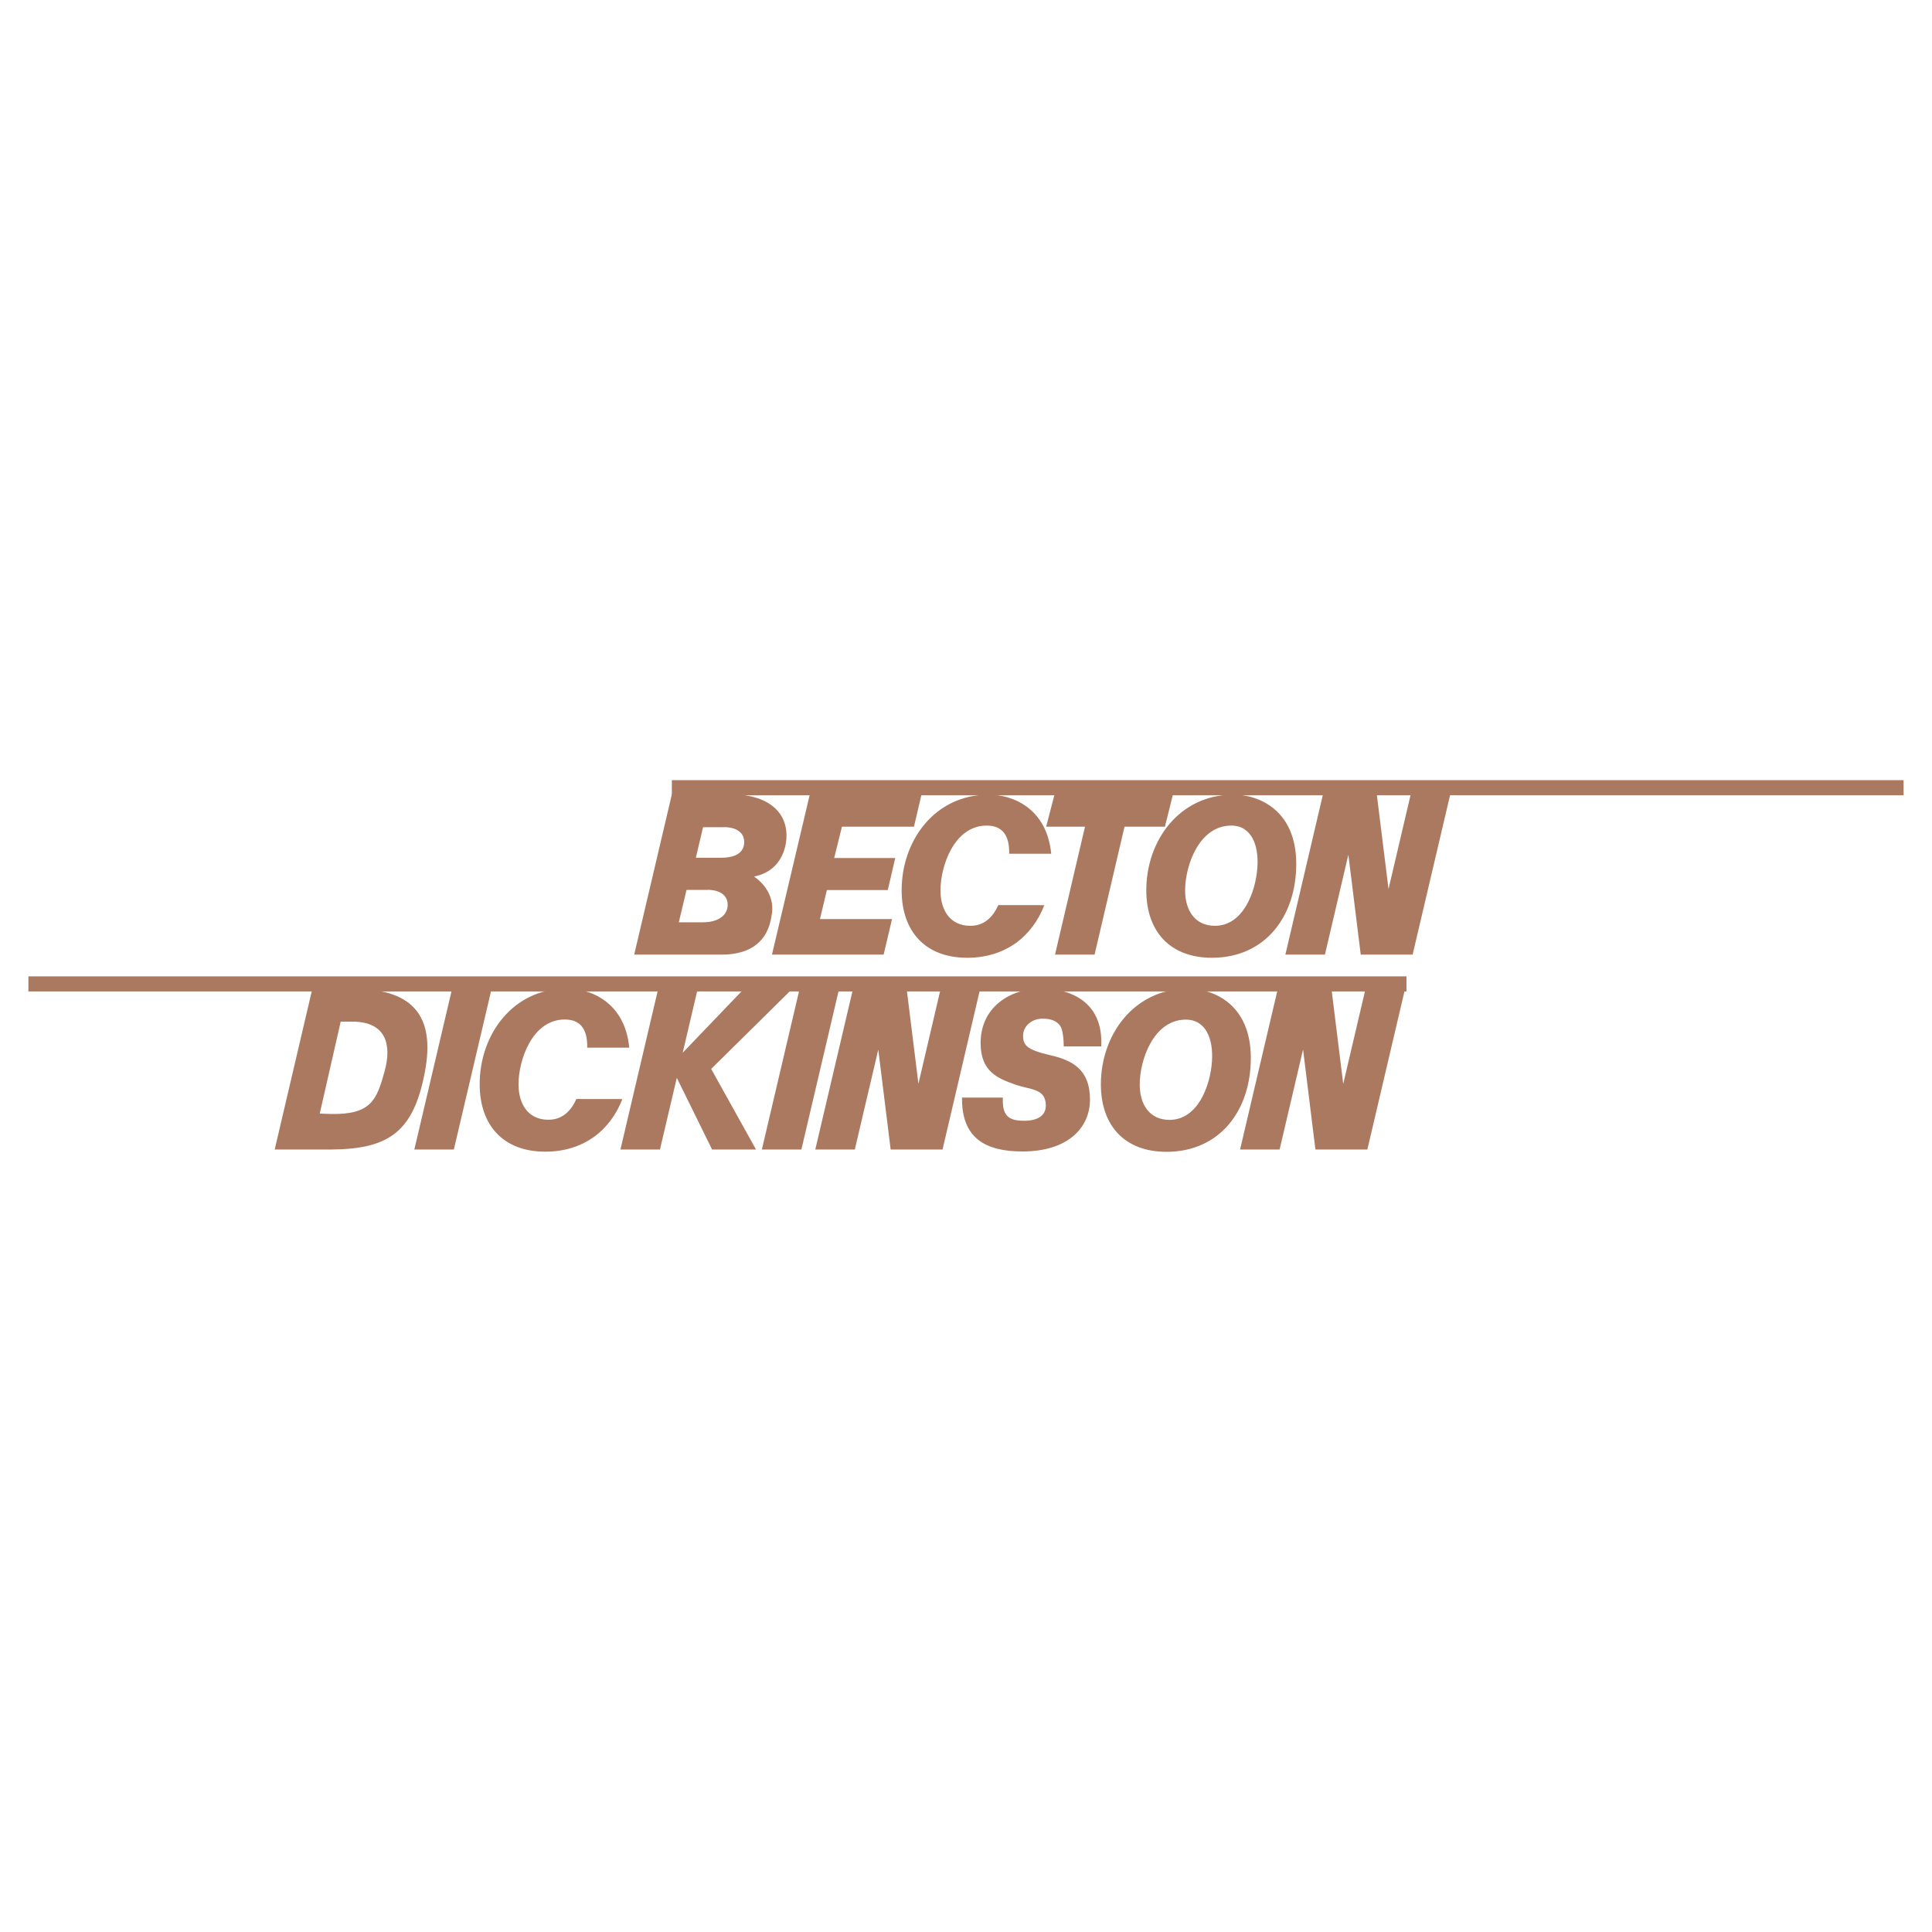 Becton Dickinson logo colors